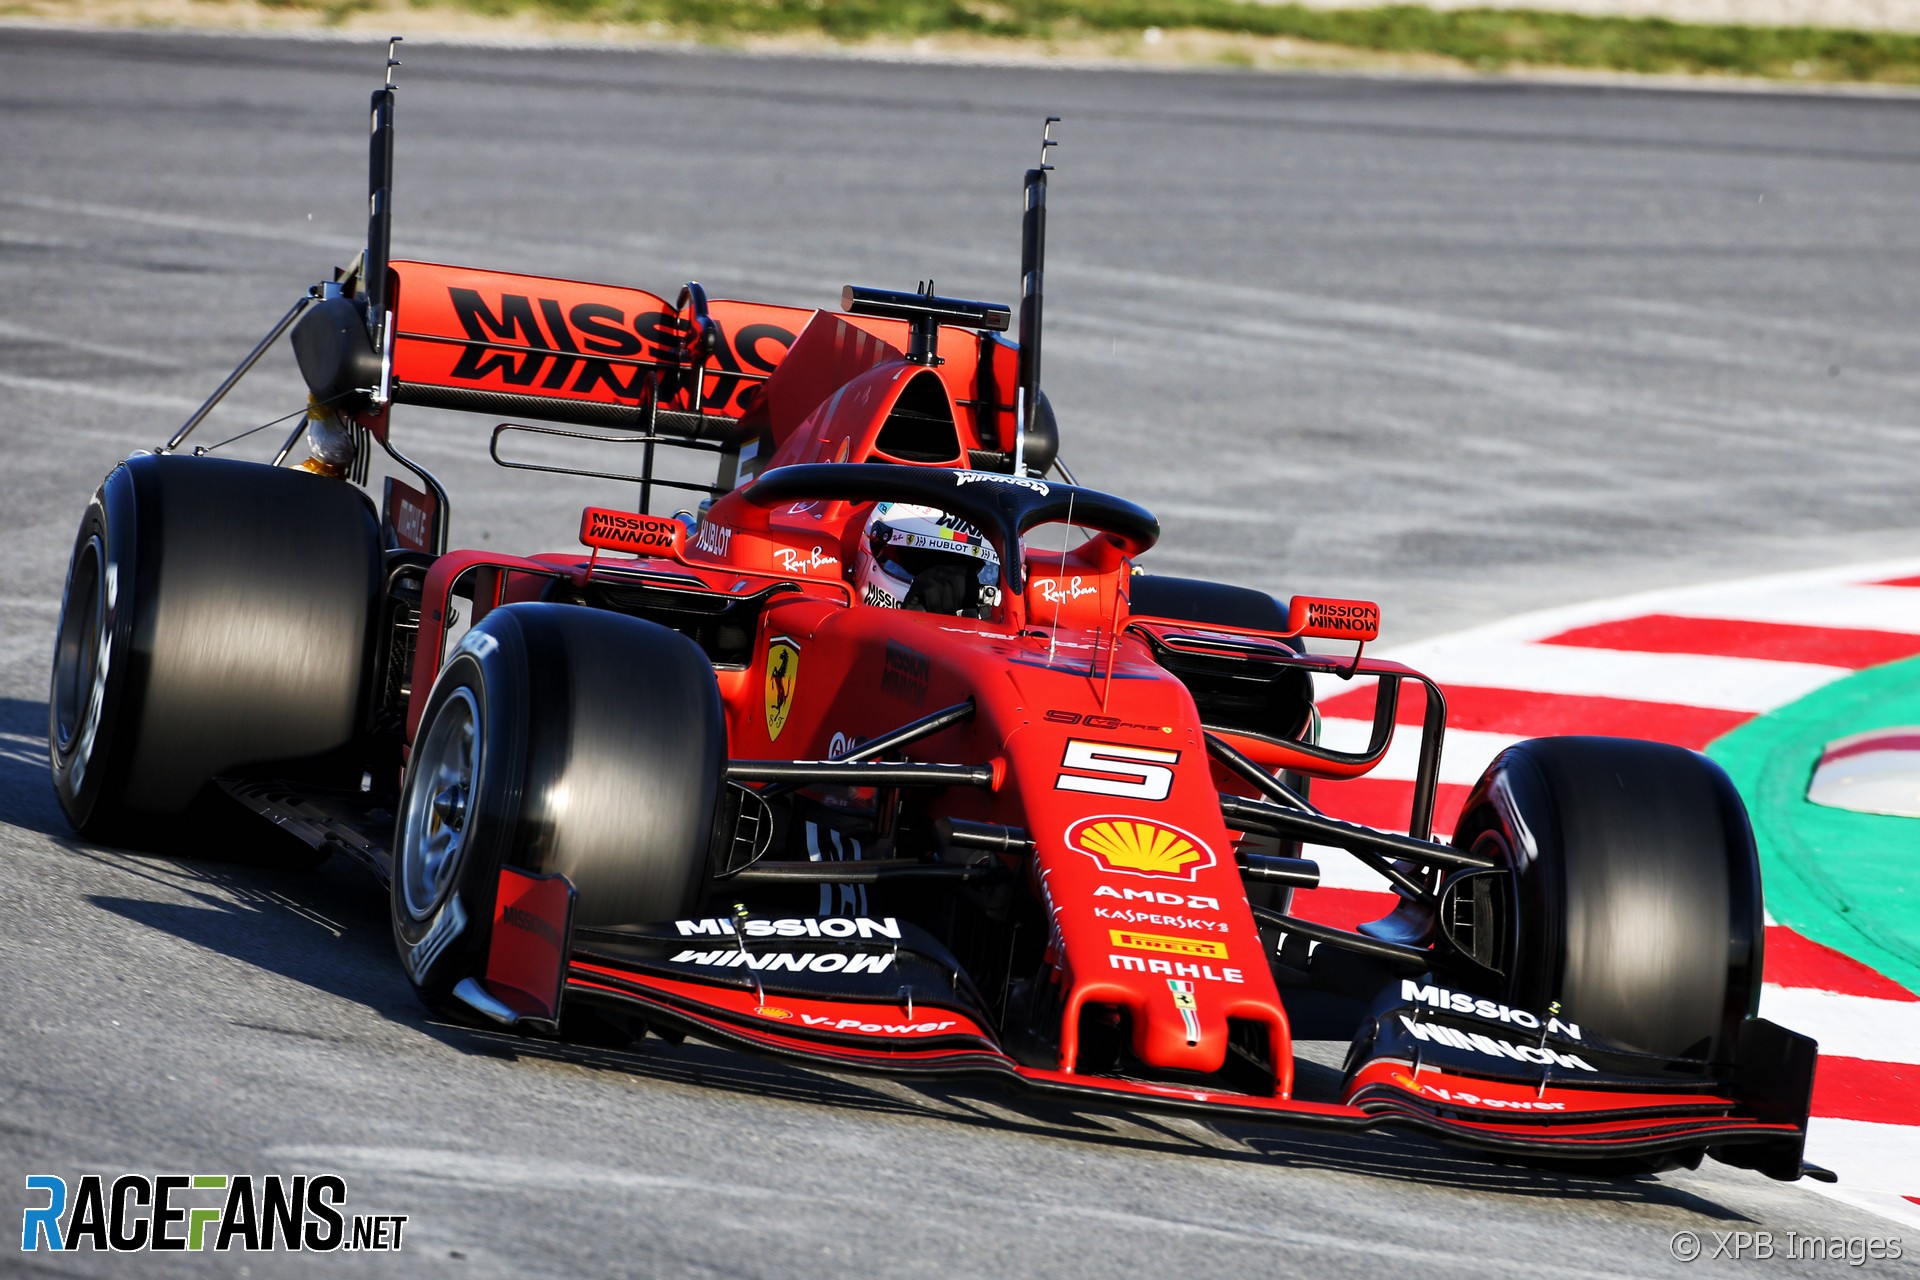 F1 2019: Ferrari leads McLaren on first day of testing - RaceFans